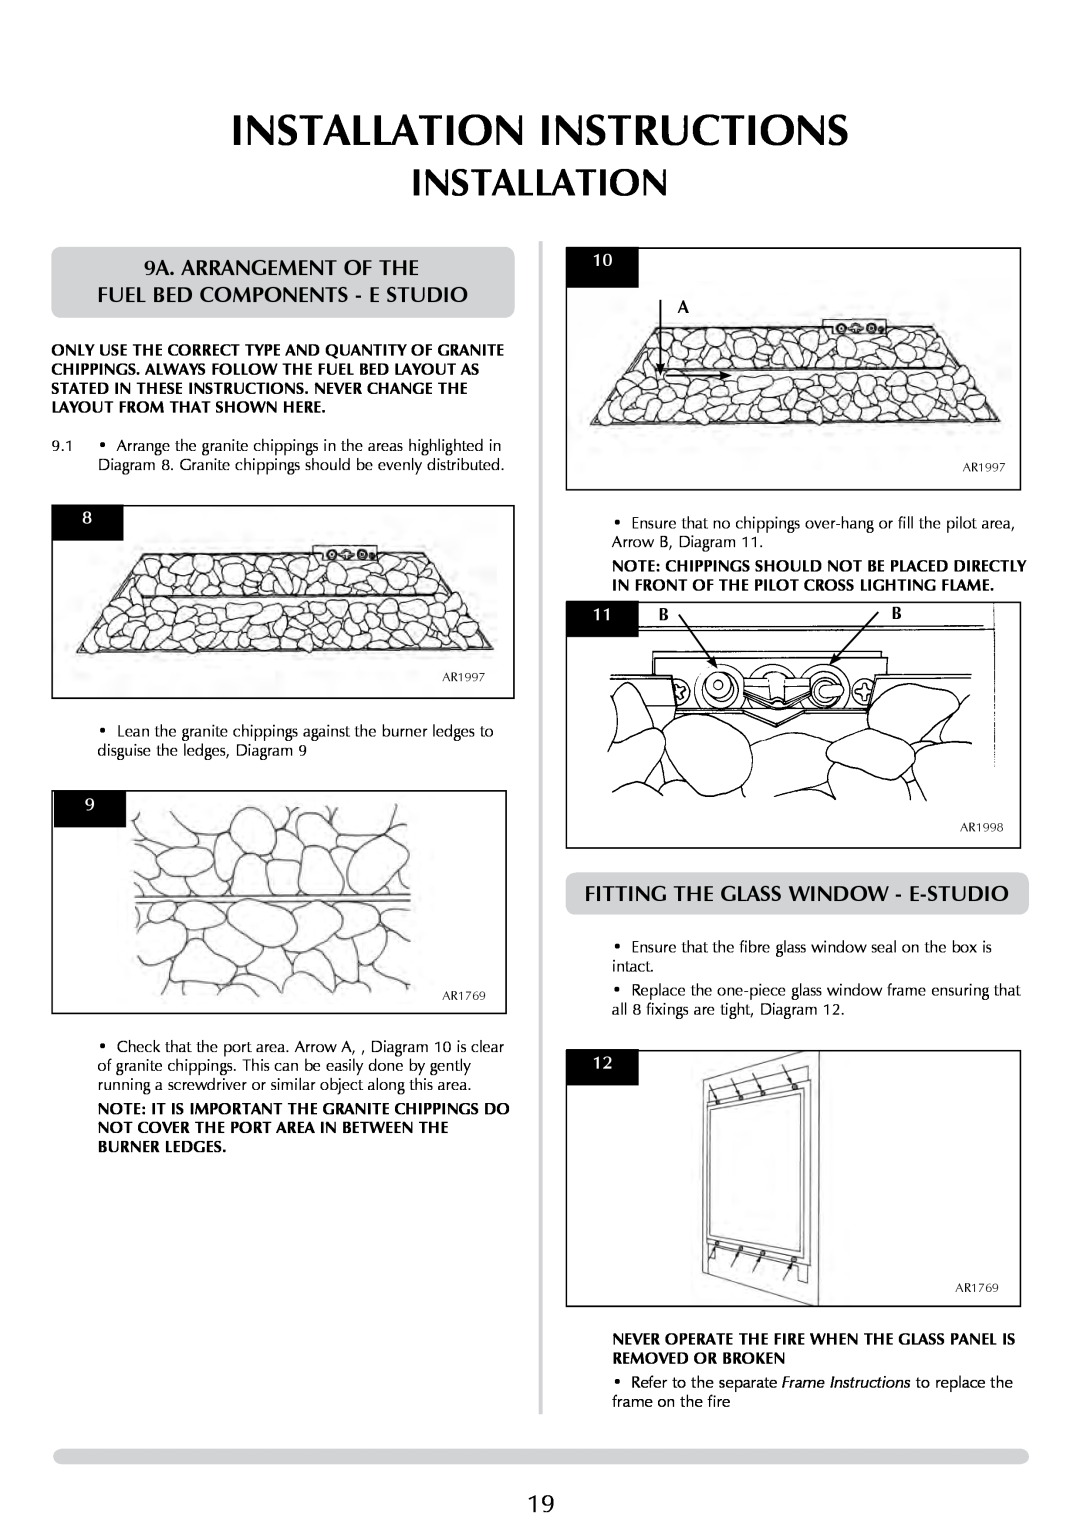 Stovax PR0776 manual 9A. ARRANGeMENT OF THE FUEL BED COMPONENTS - E STUDIO, Installation Instructions 